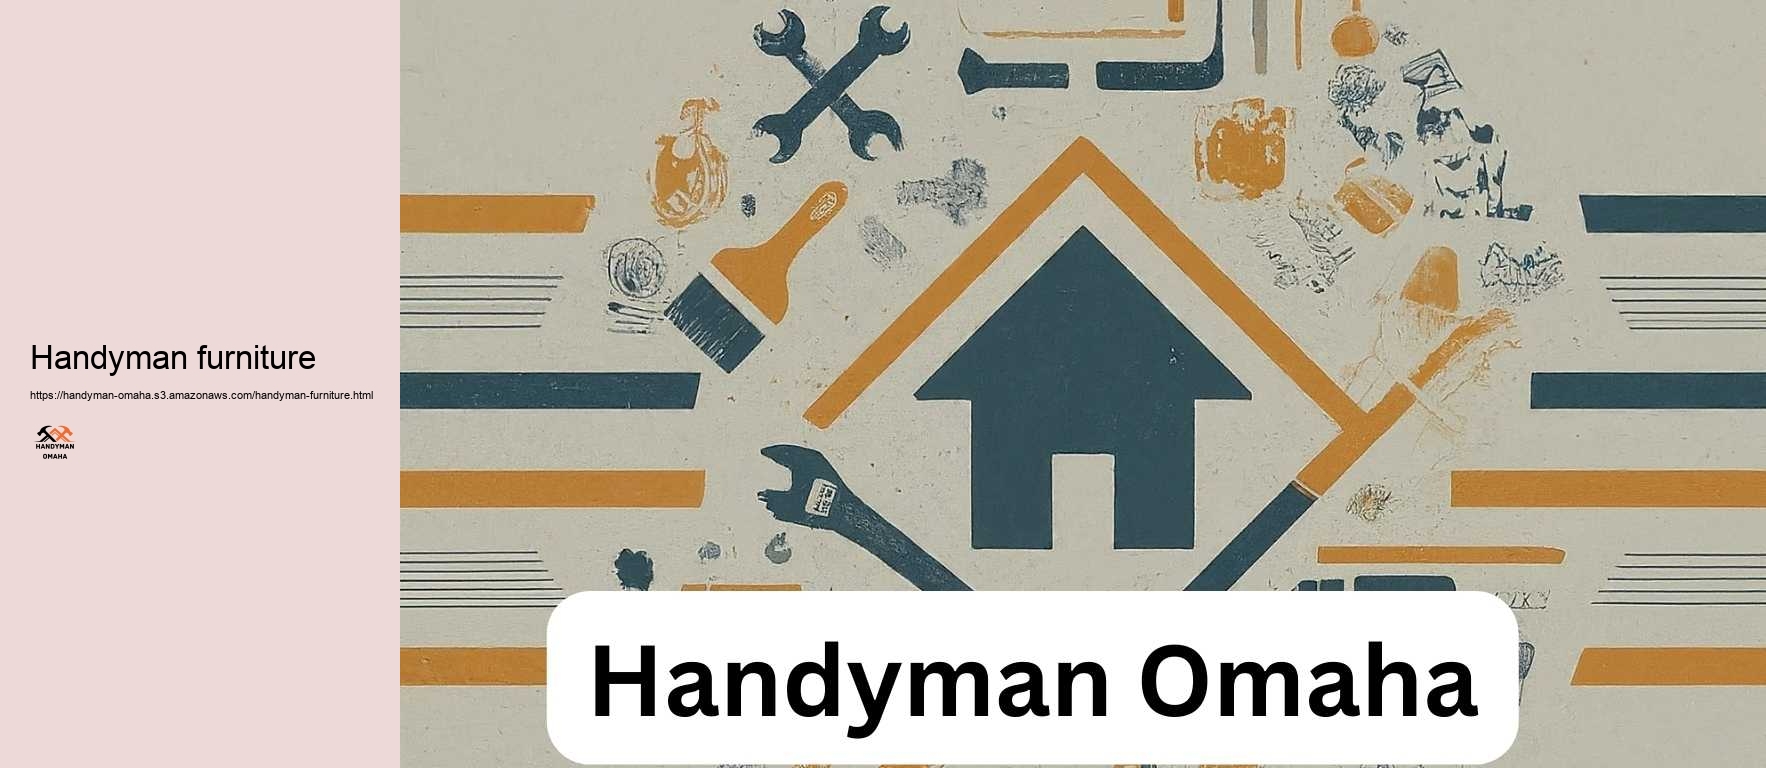 Handyman furniture